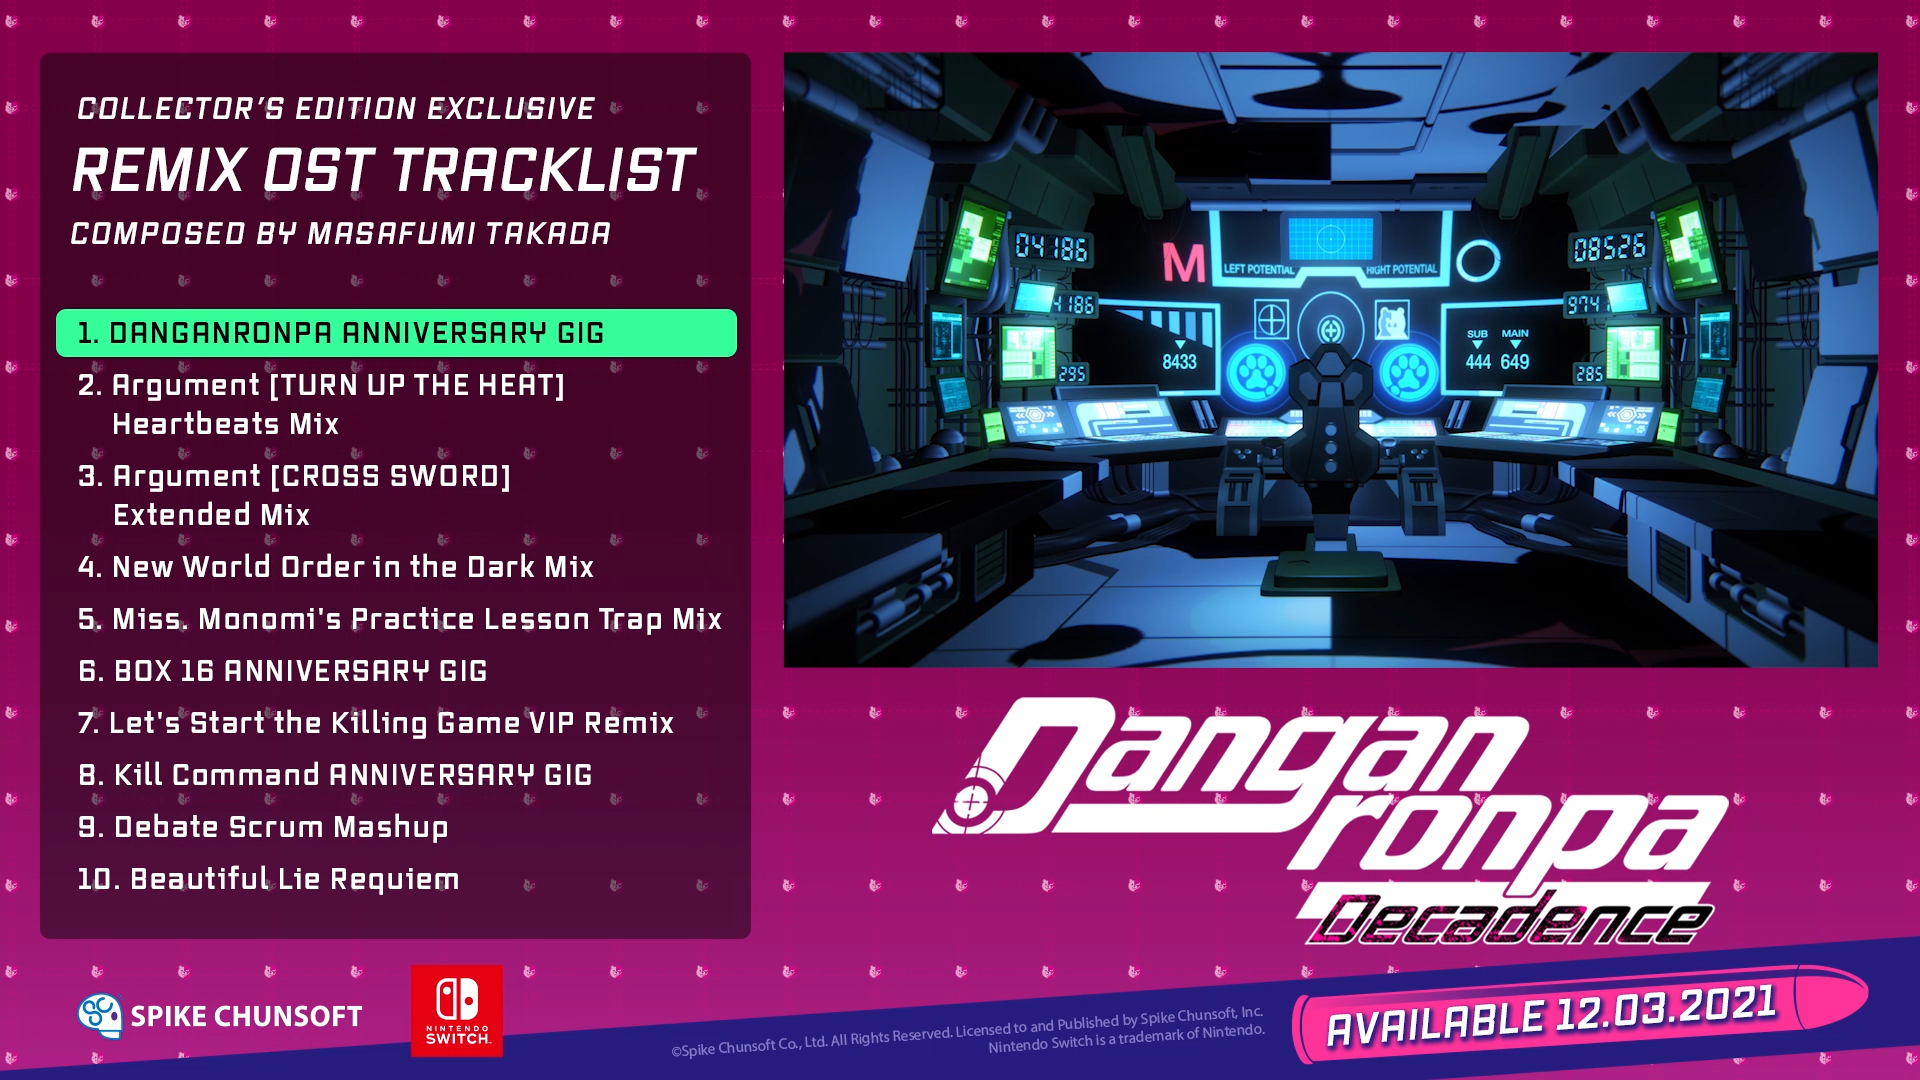 Soundtrack remix. Danganronpa Decadence Collector's Edition - Nintendo Switch. Danganronpa Decadence OST. Danganronpa Decadence - Collector's Edition. Danganronpa Decadence OST Cover.